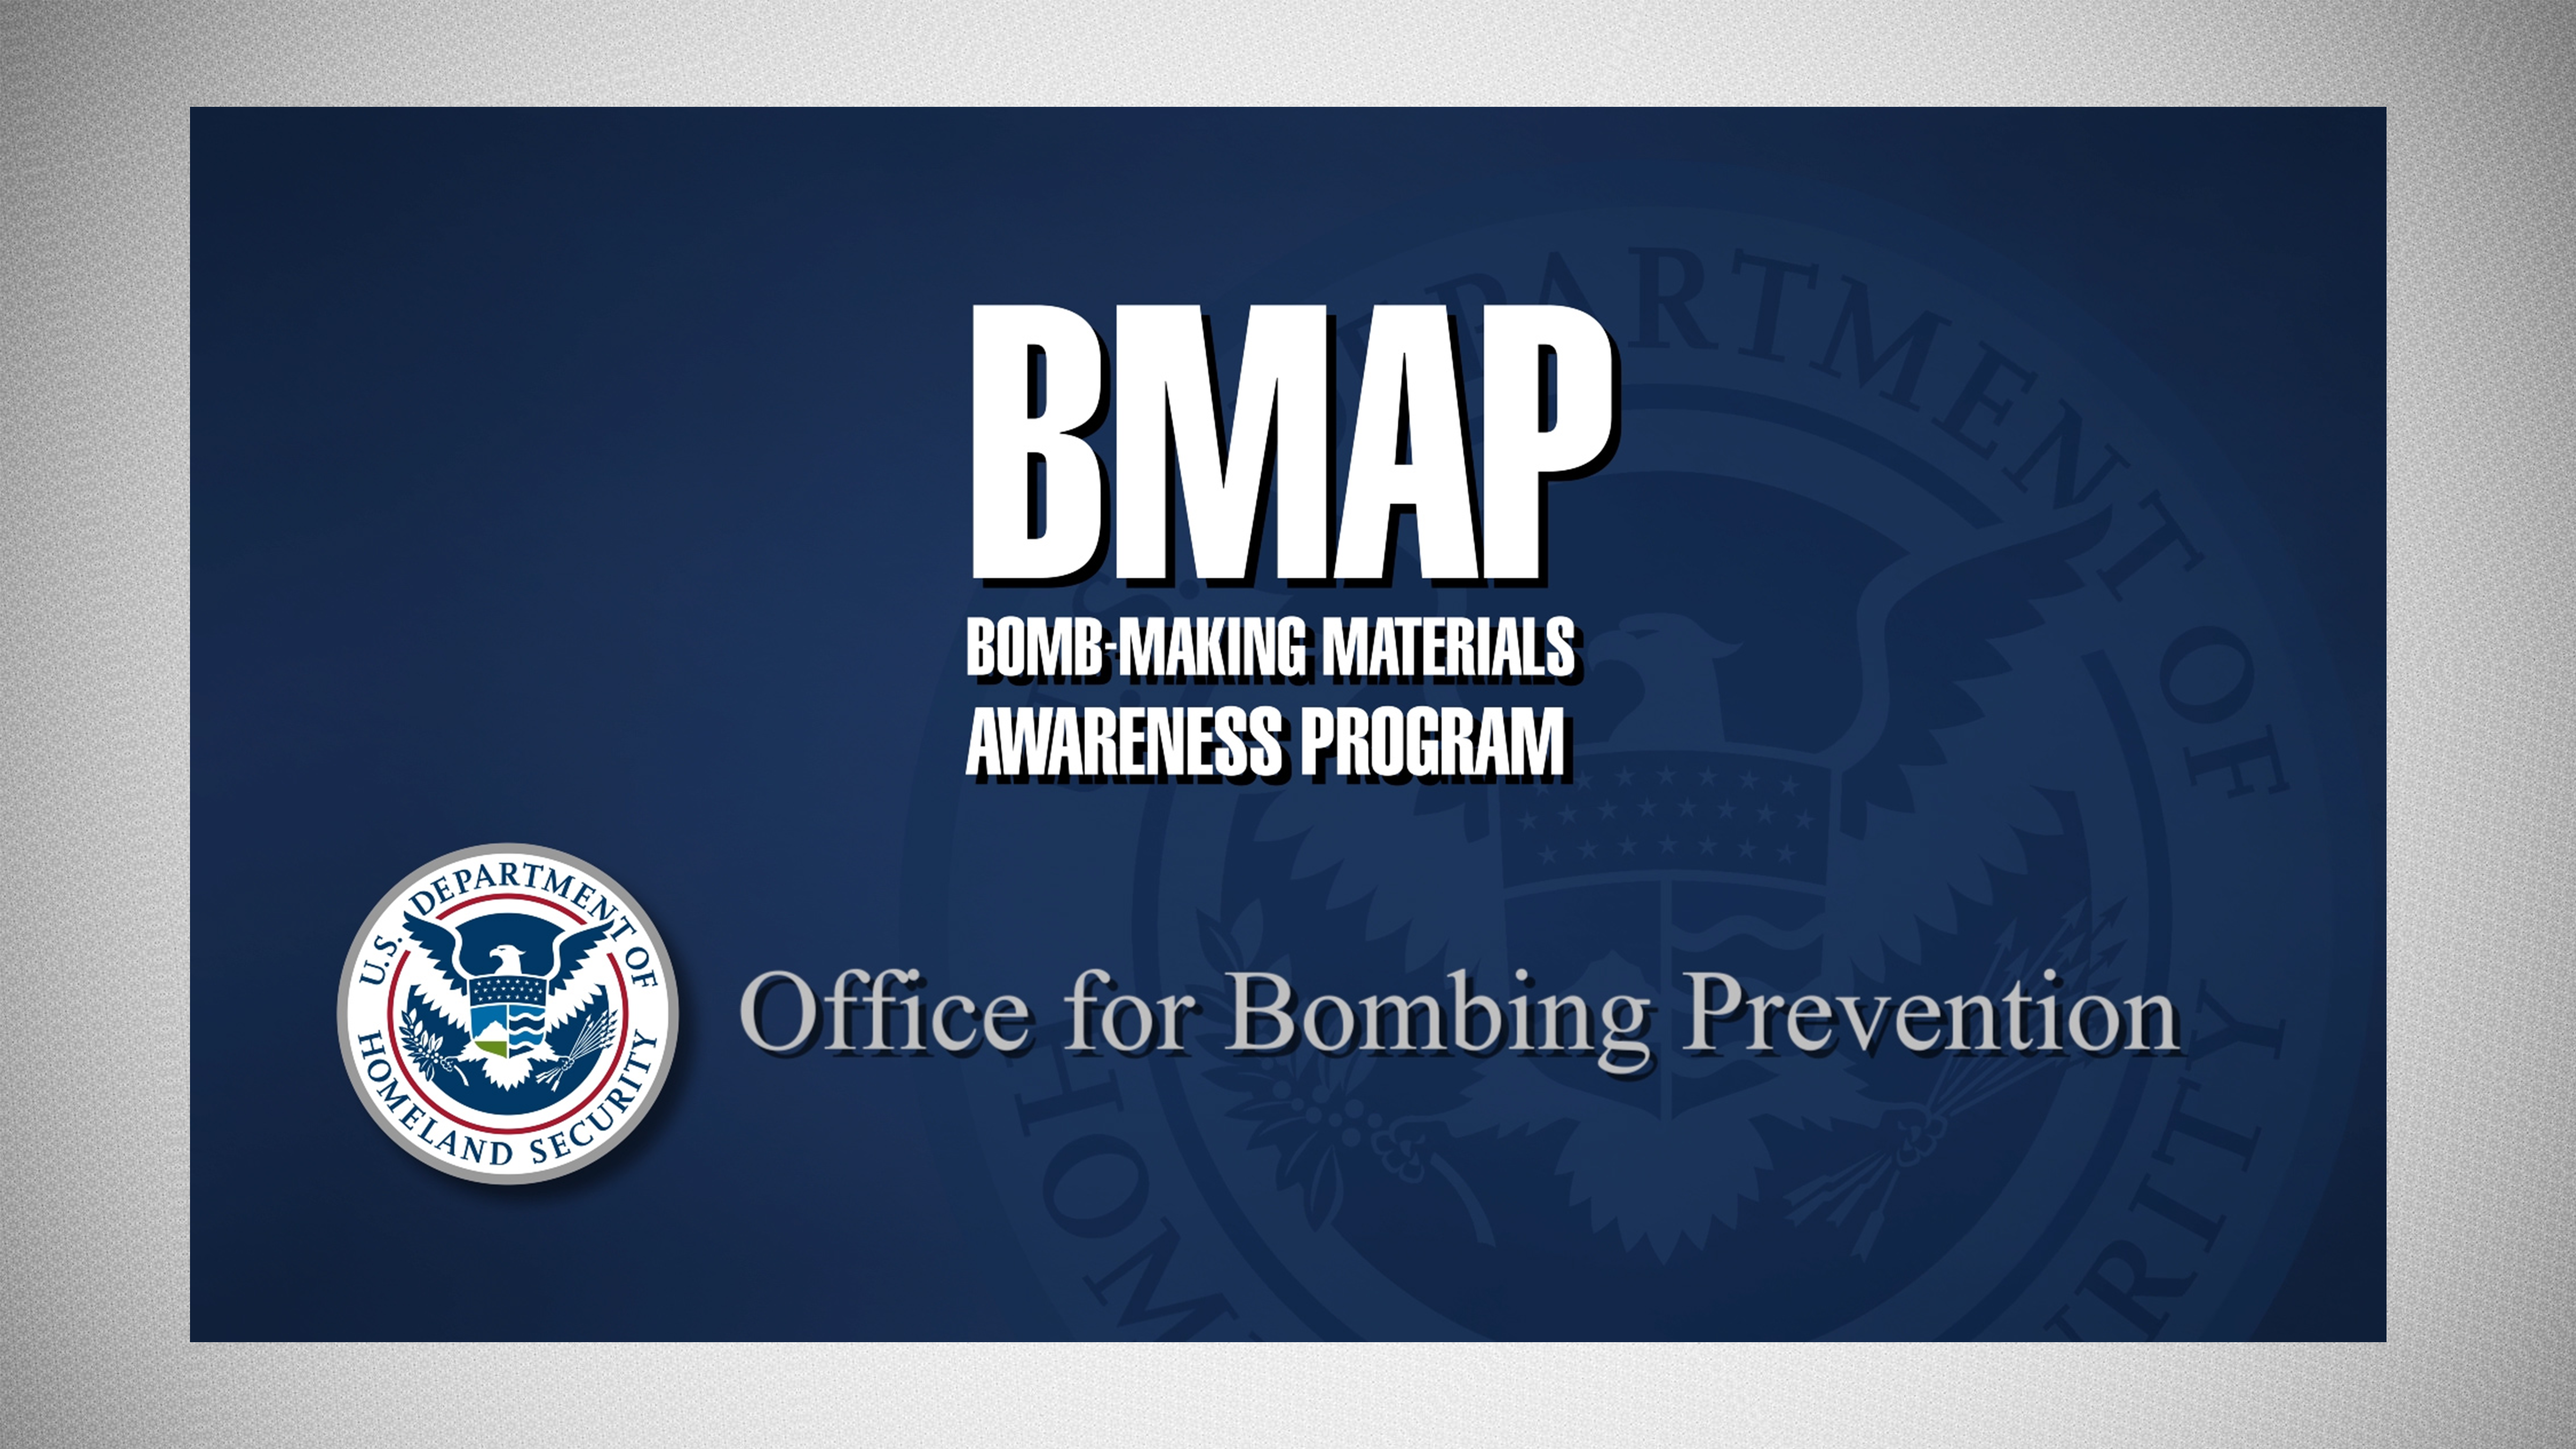 Bomb-Making Materials Awareness Program